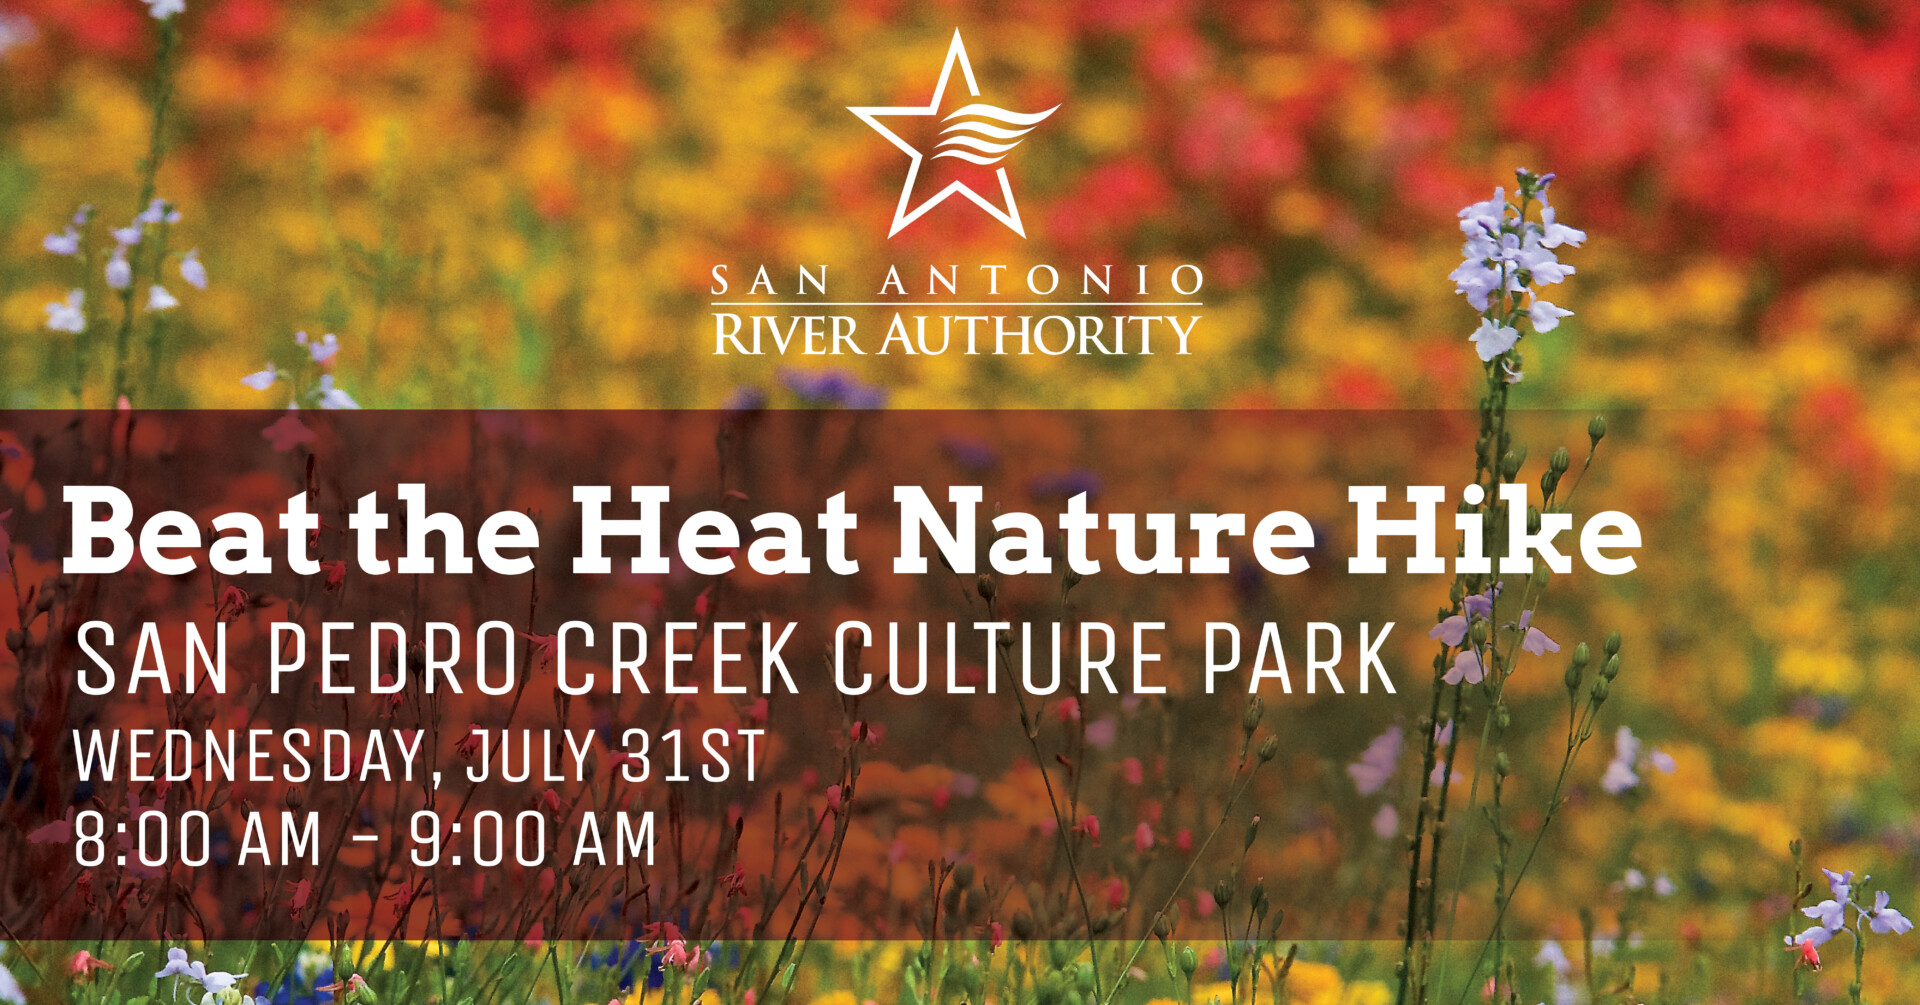 Beat the Heat Nature Hike at San Pedro Creek Culture Park July 31